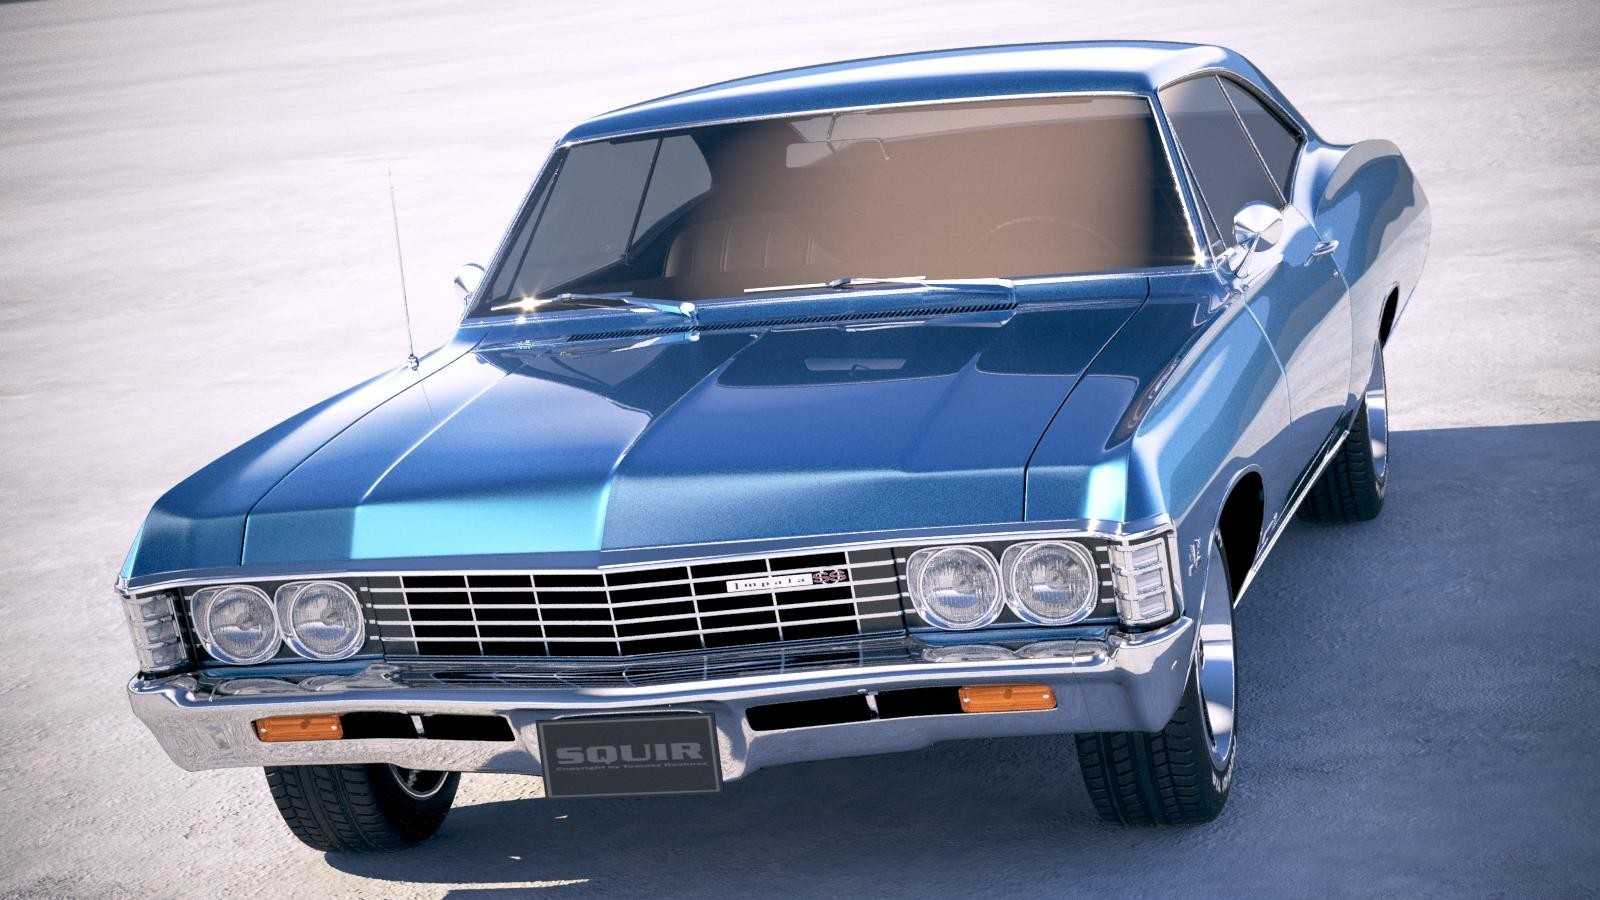 Шевроле импала 1967 года (chevrolet impala 1967): стоимость, характеристики...